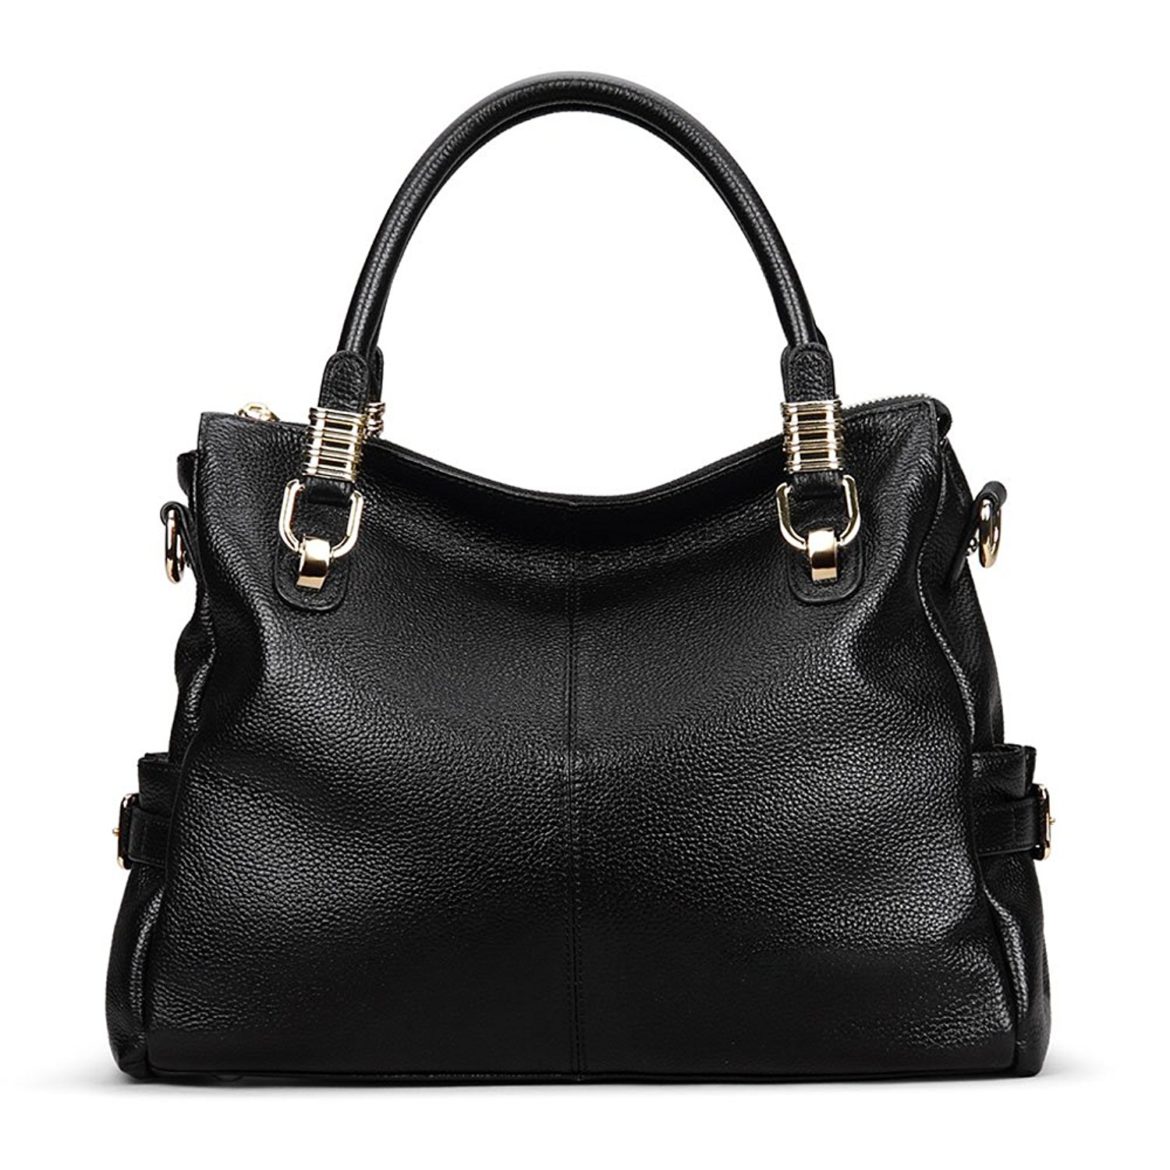 Kattee Women’s Urban Style Genuine Leather Tote Shoulder Bag ...